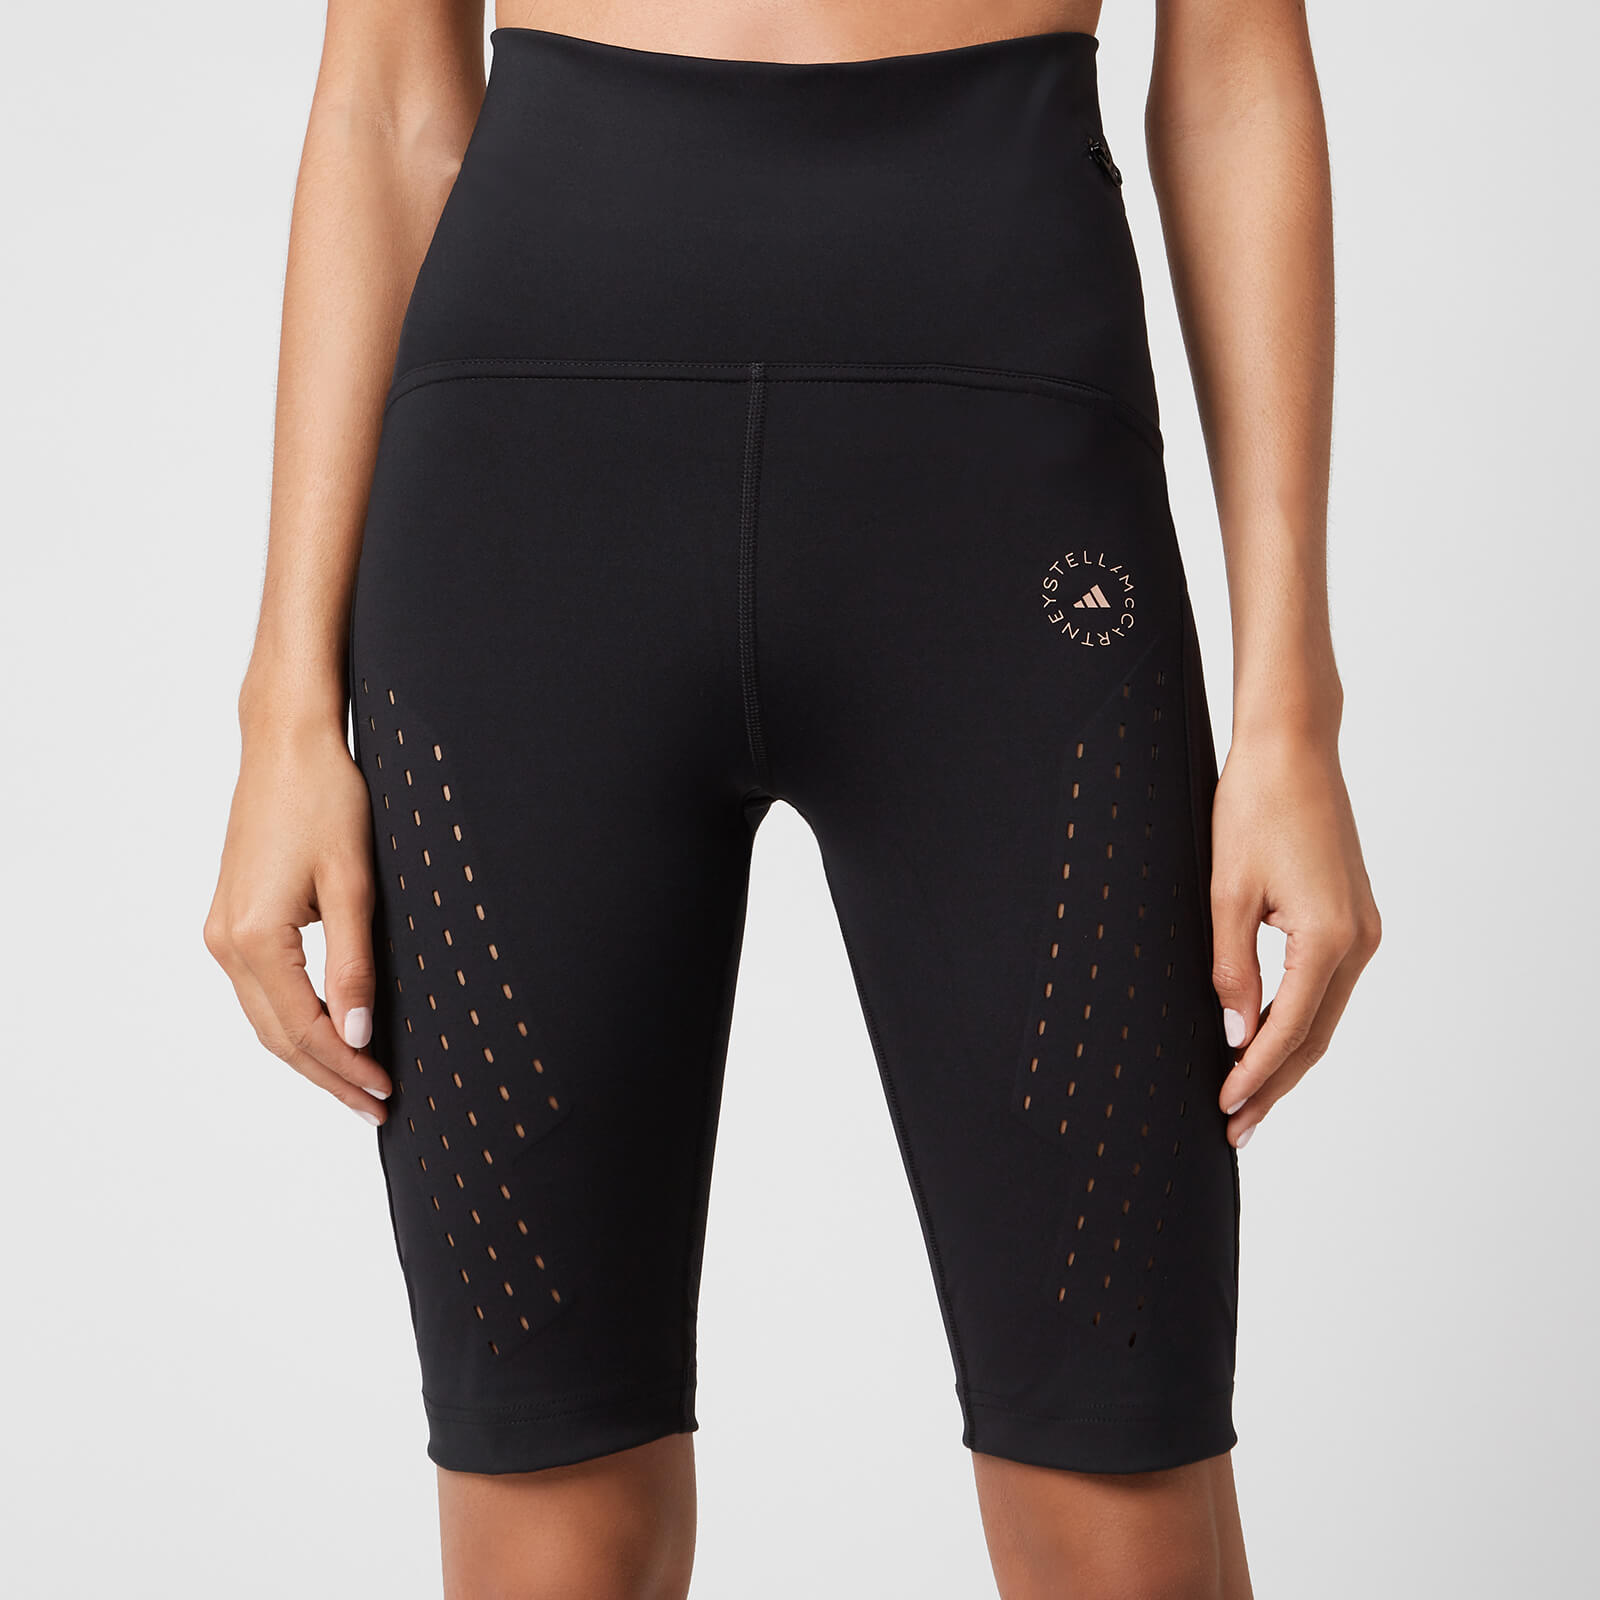 adidas by Stella McCartney Women's Truepure Cycle Shorts - Black - L